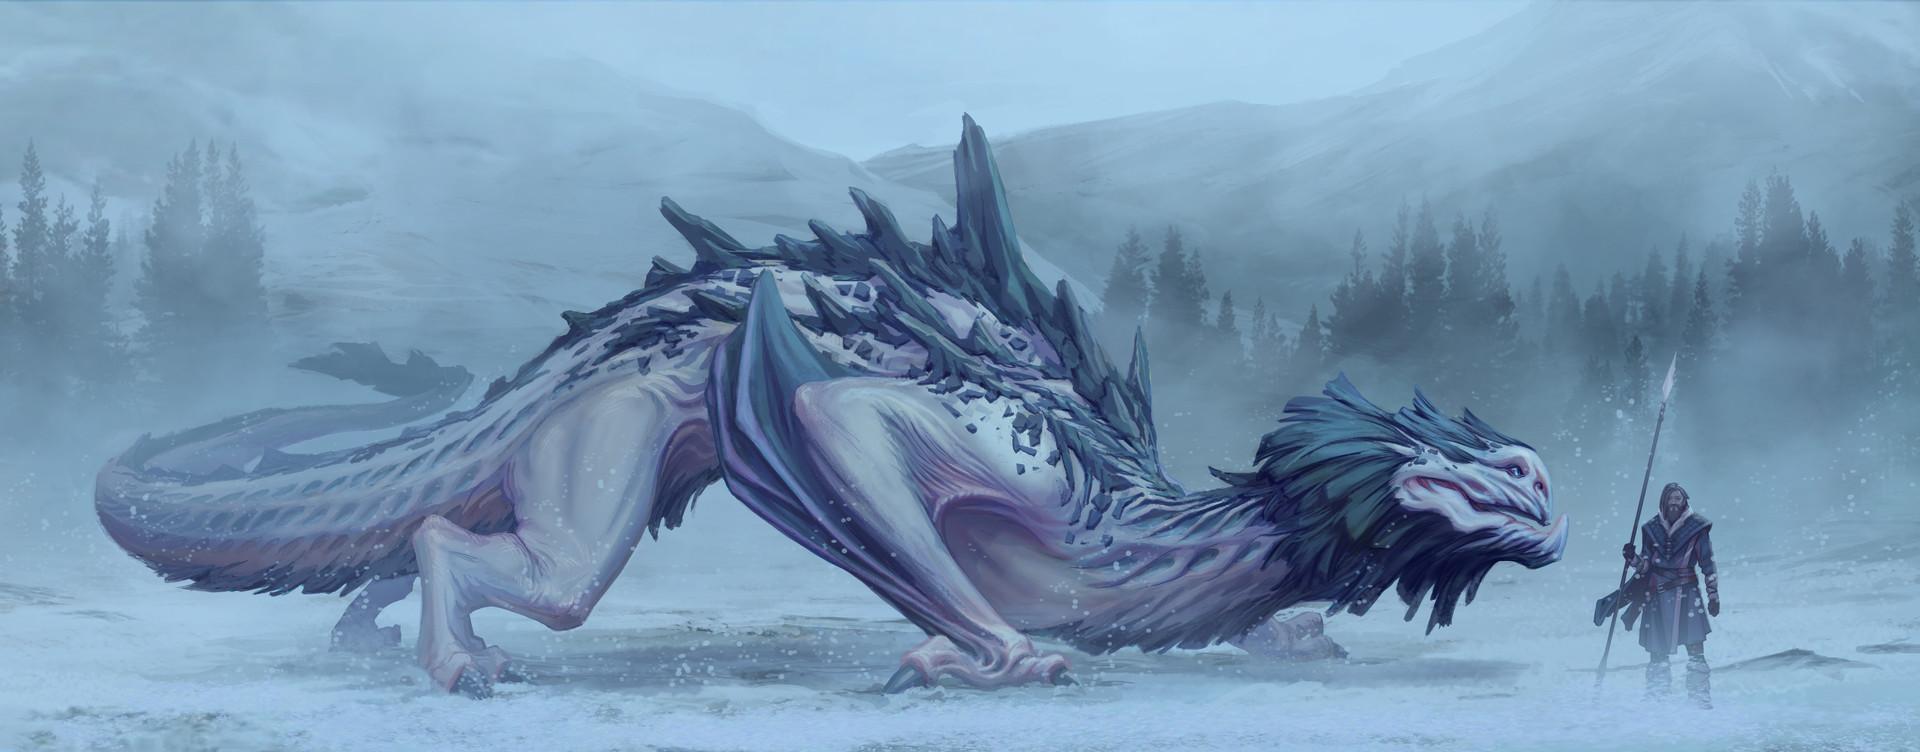 Snow Dragon [1920x752]